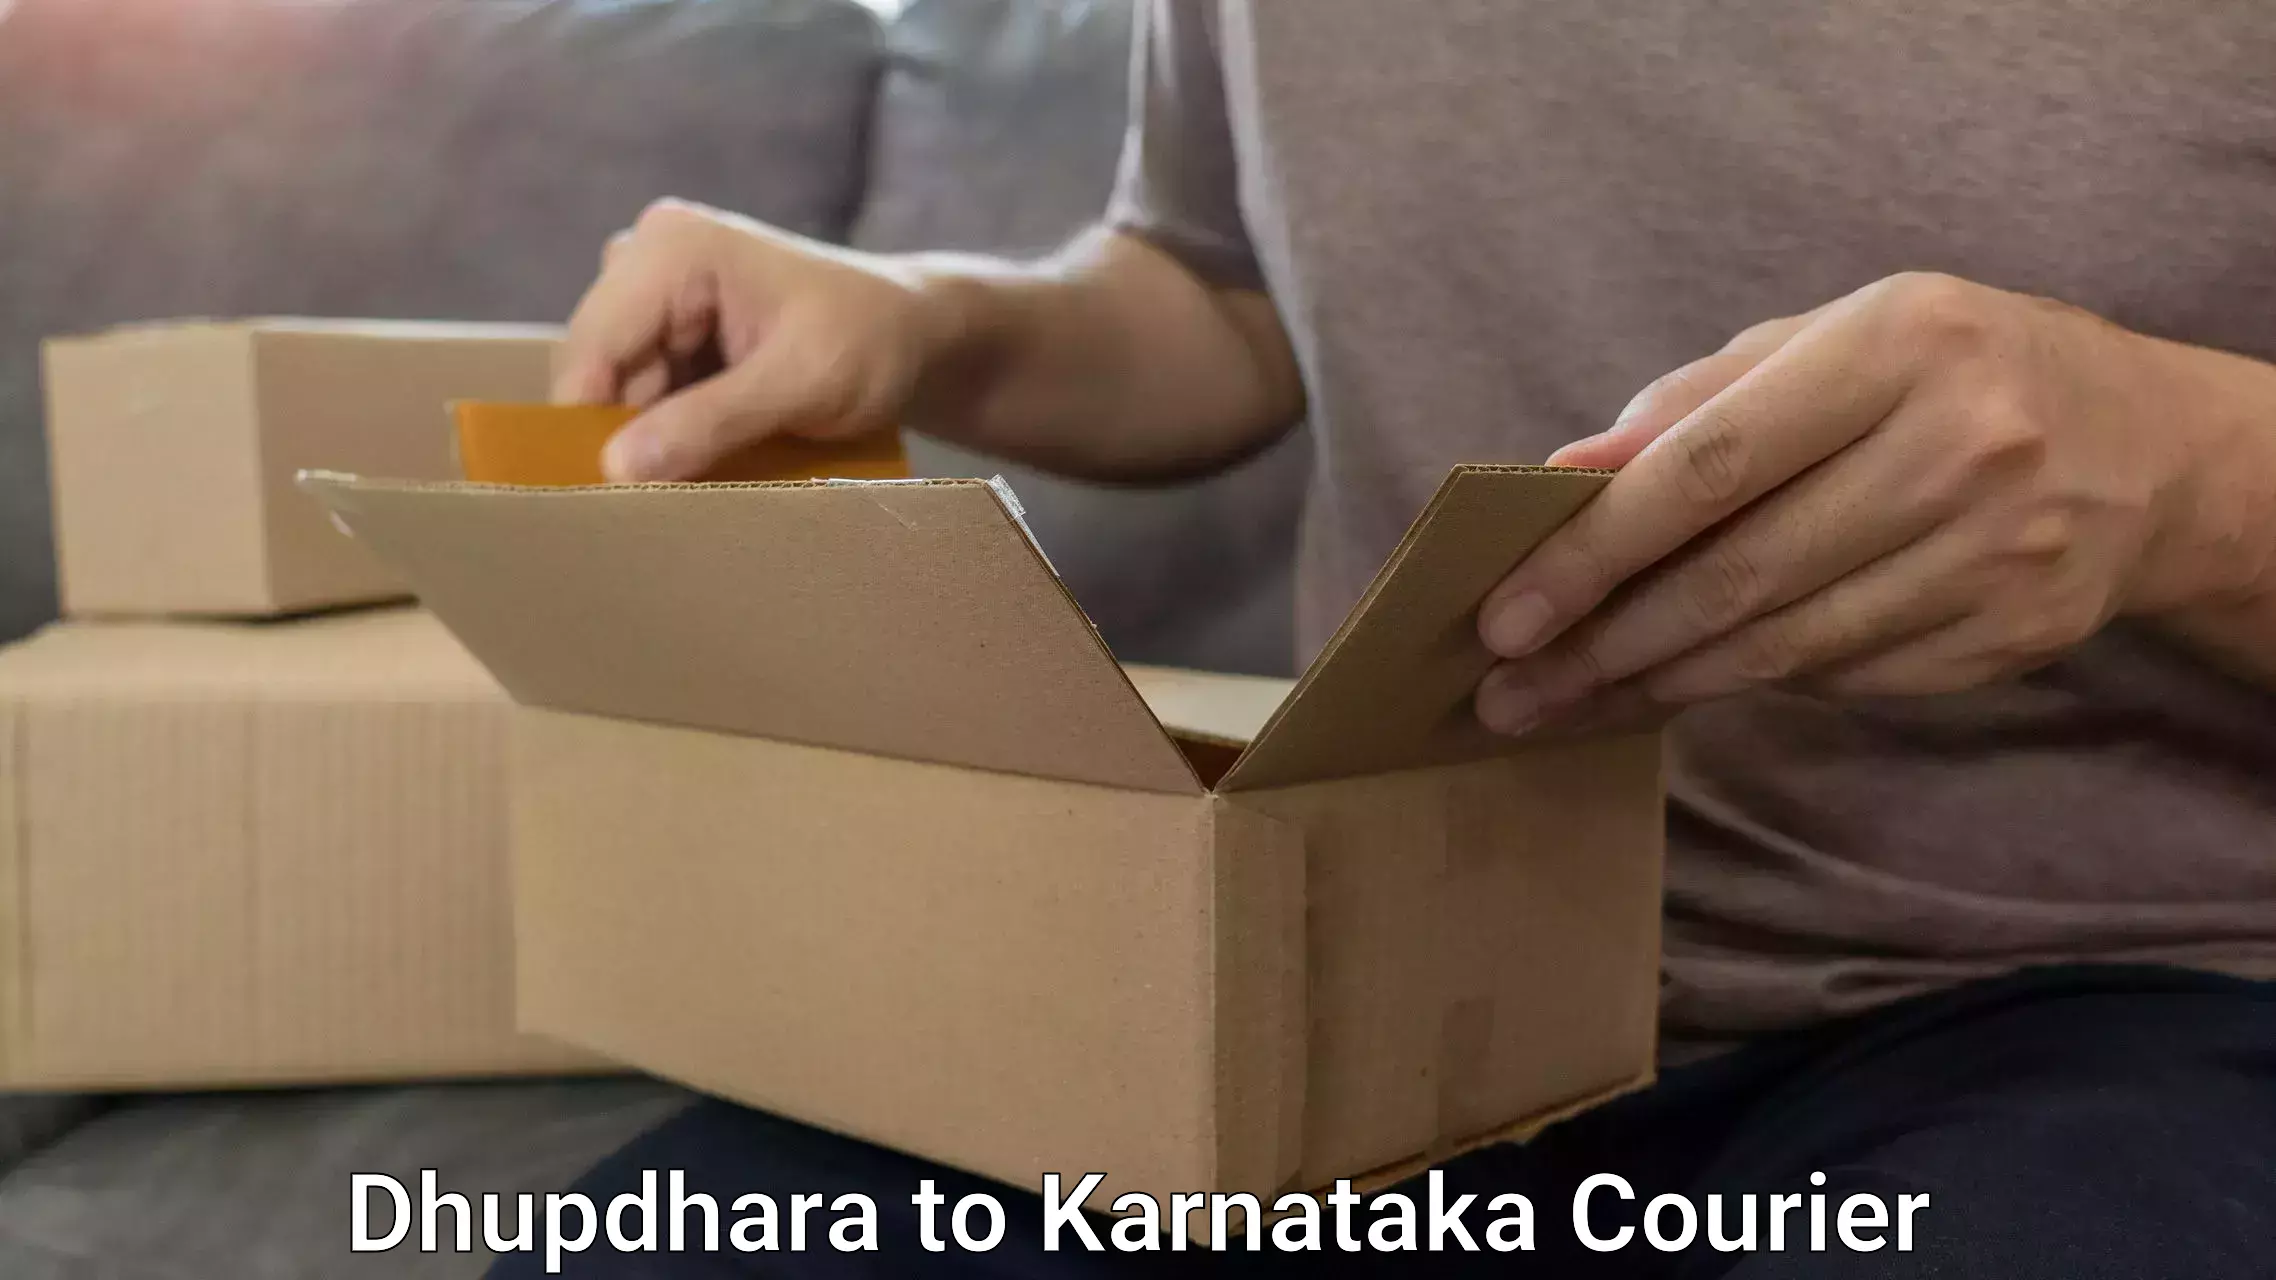 Luggage shipment tracking Dhupdhara to Karnataka